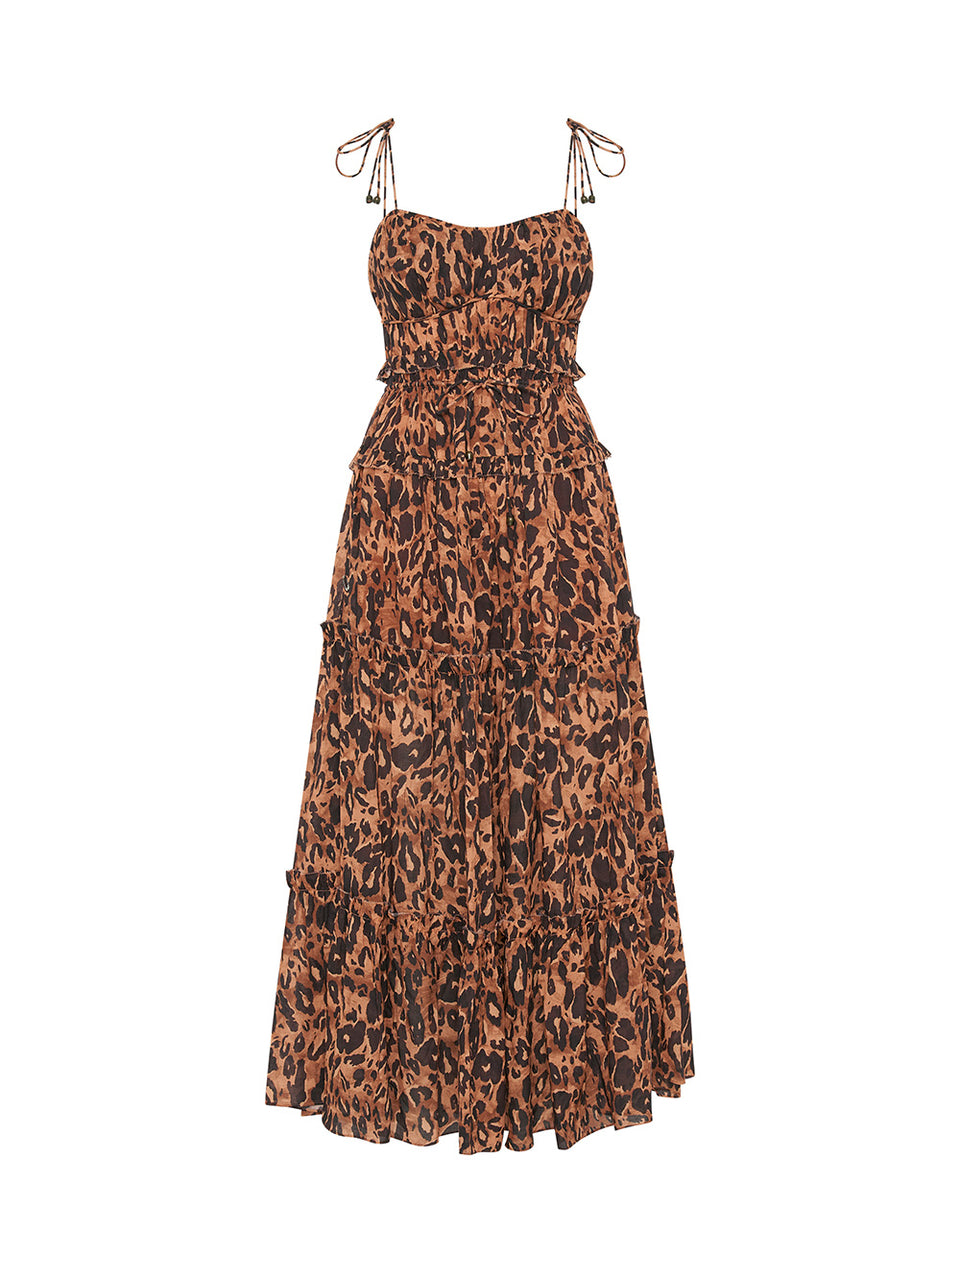 Madison Midi Dress KIVARI | Orange and brown leopard midi dress